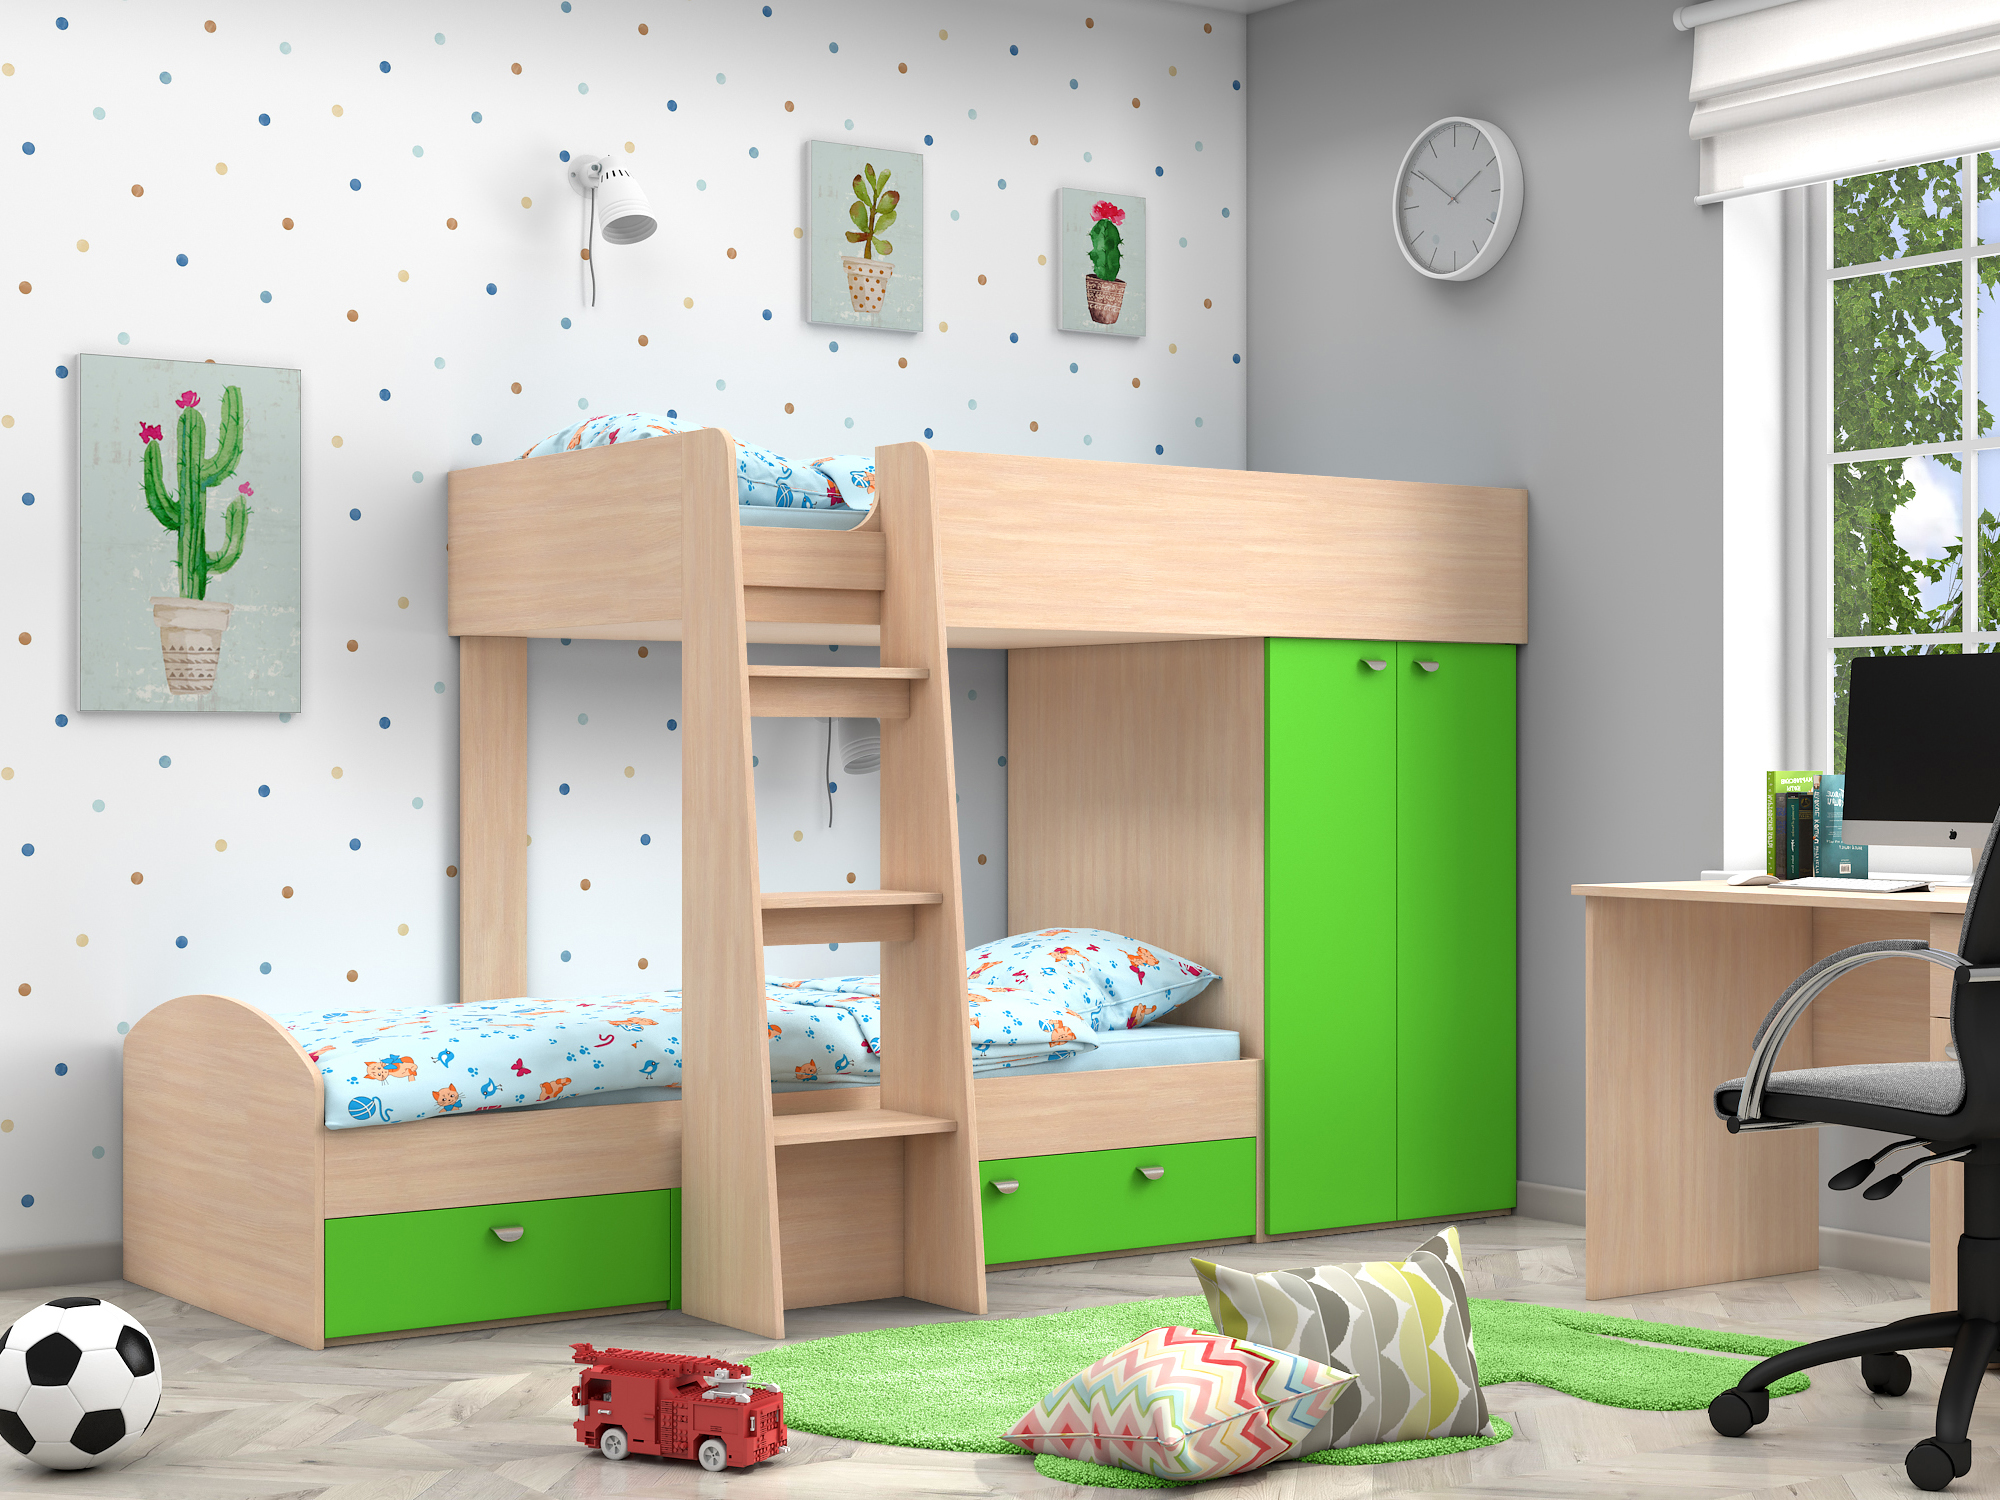 Двухъярусная кровать Golden Kids-2 (90х200) Зеленый, Белый, Бежевый, ЛДСП двухъярусная кровать golden kids 2 90х200 зеленый бежевый лдсп